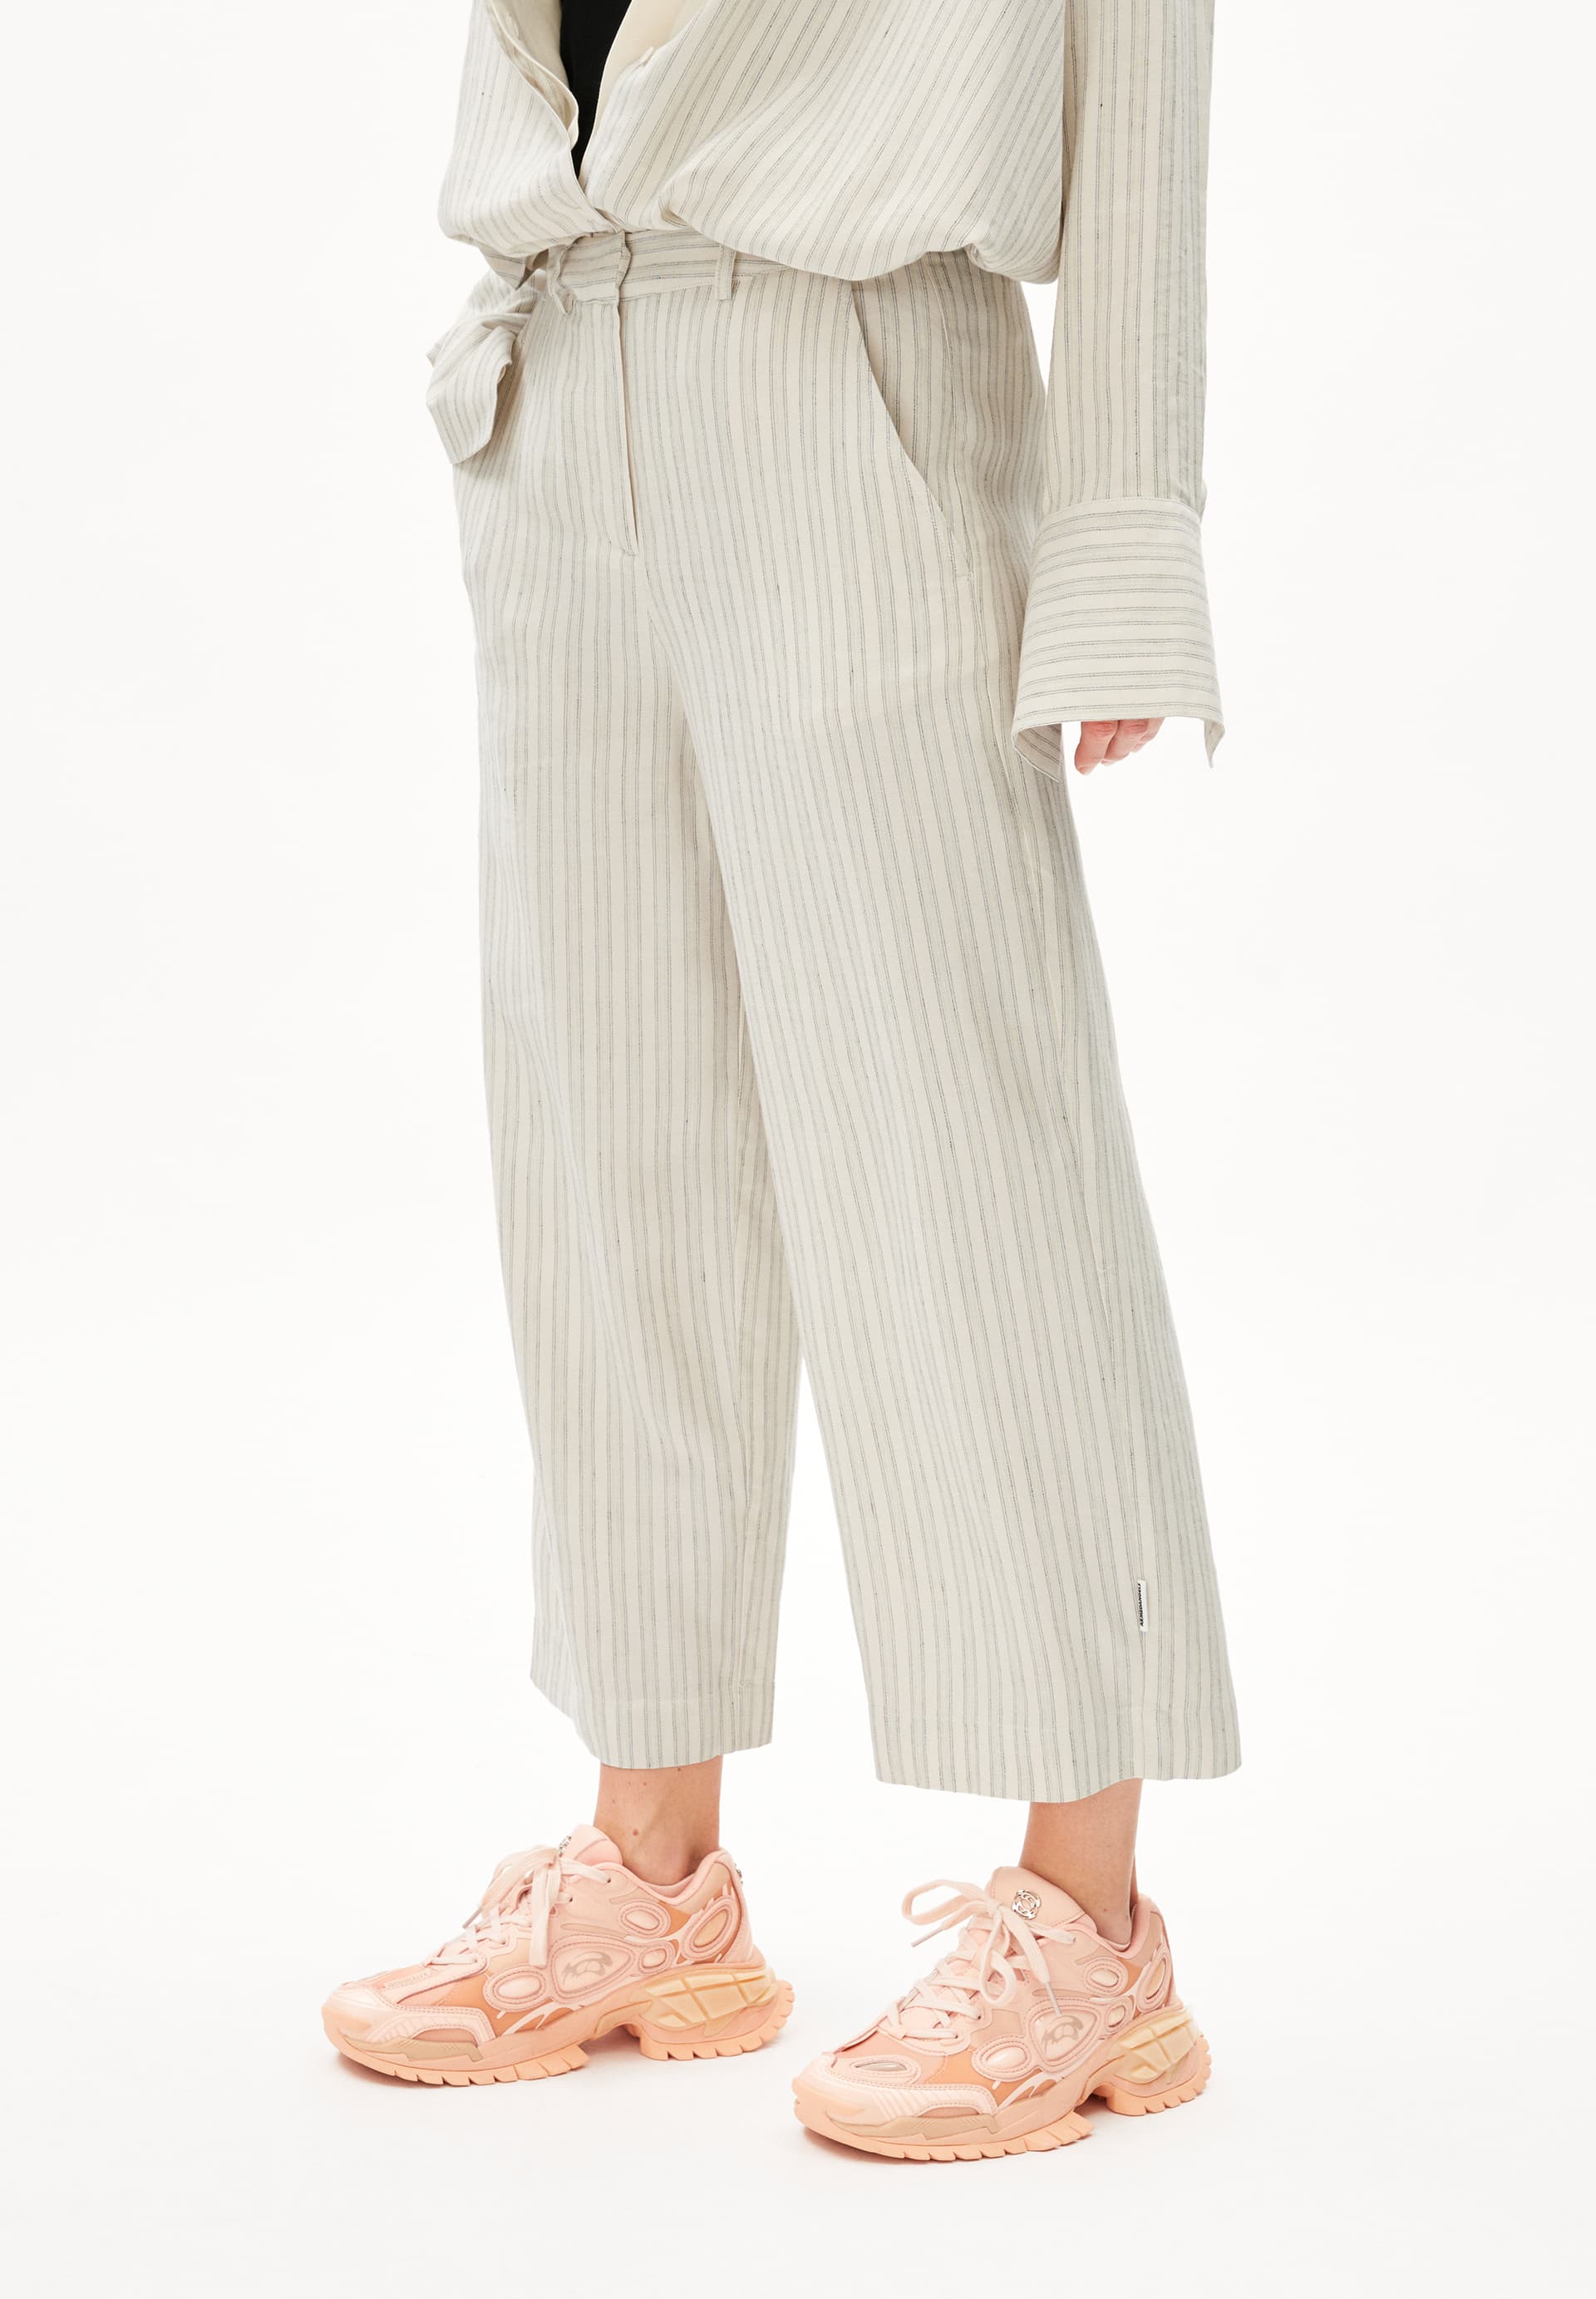 CAARUNUS LINO STRIPES Woven Pants made of Linen-Mix